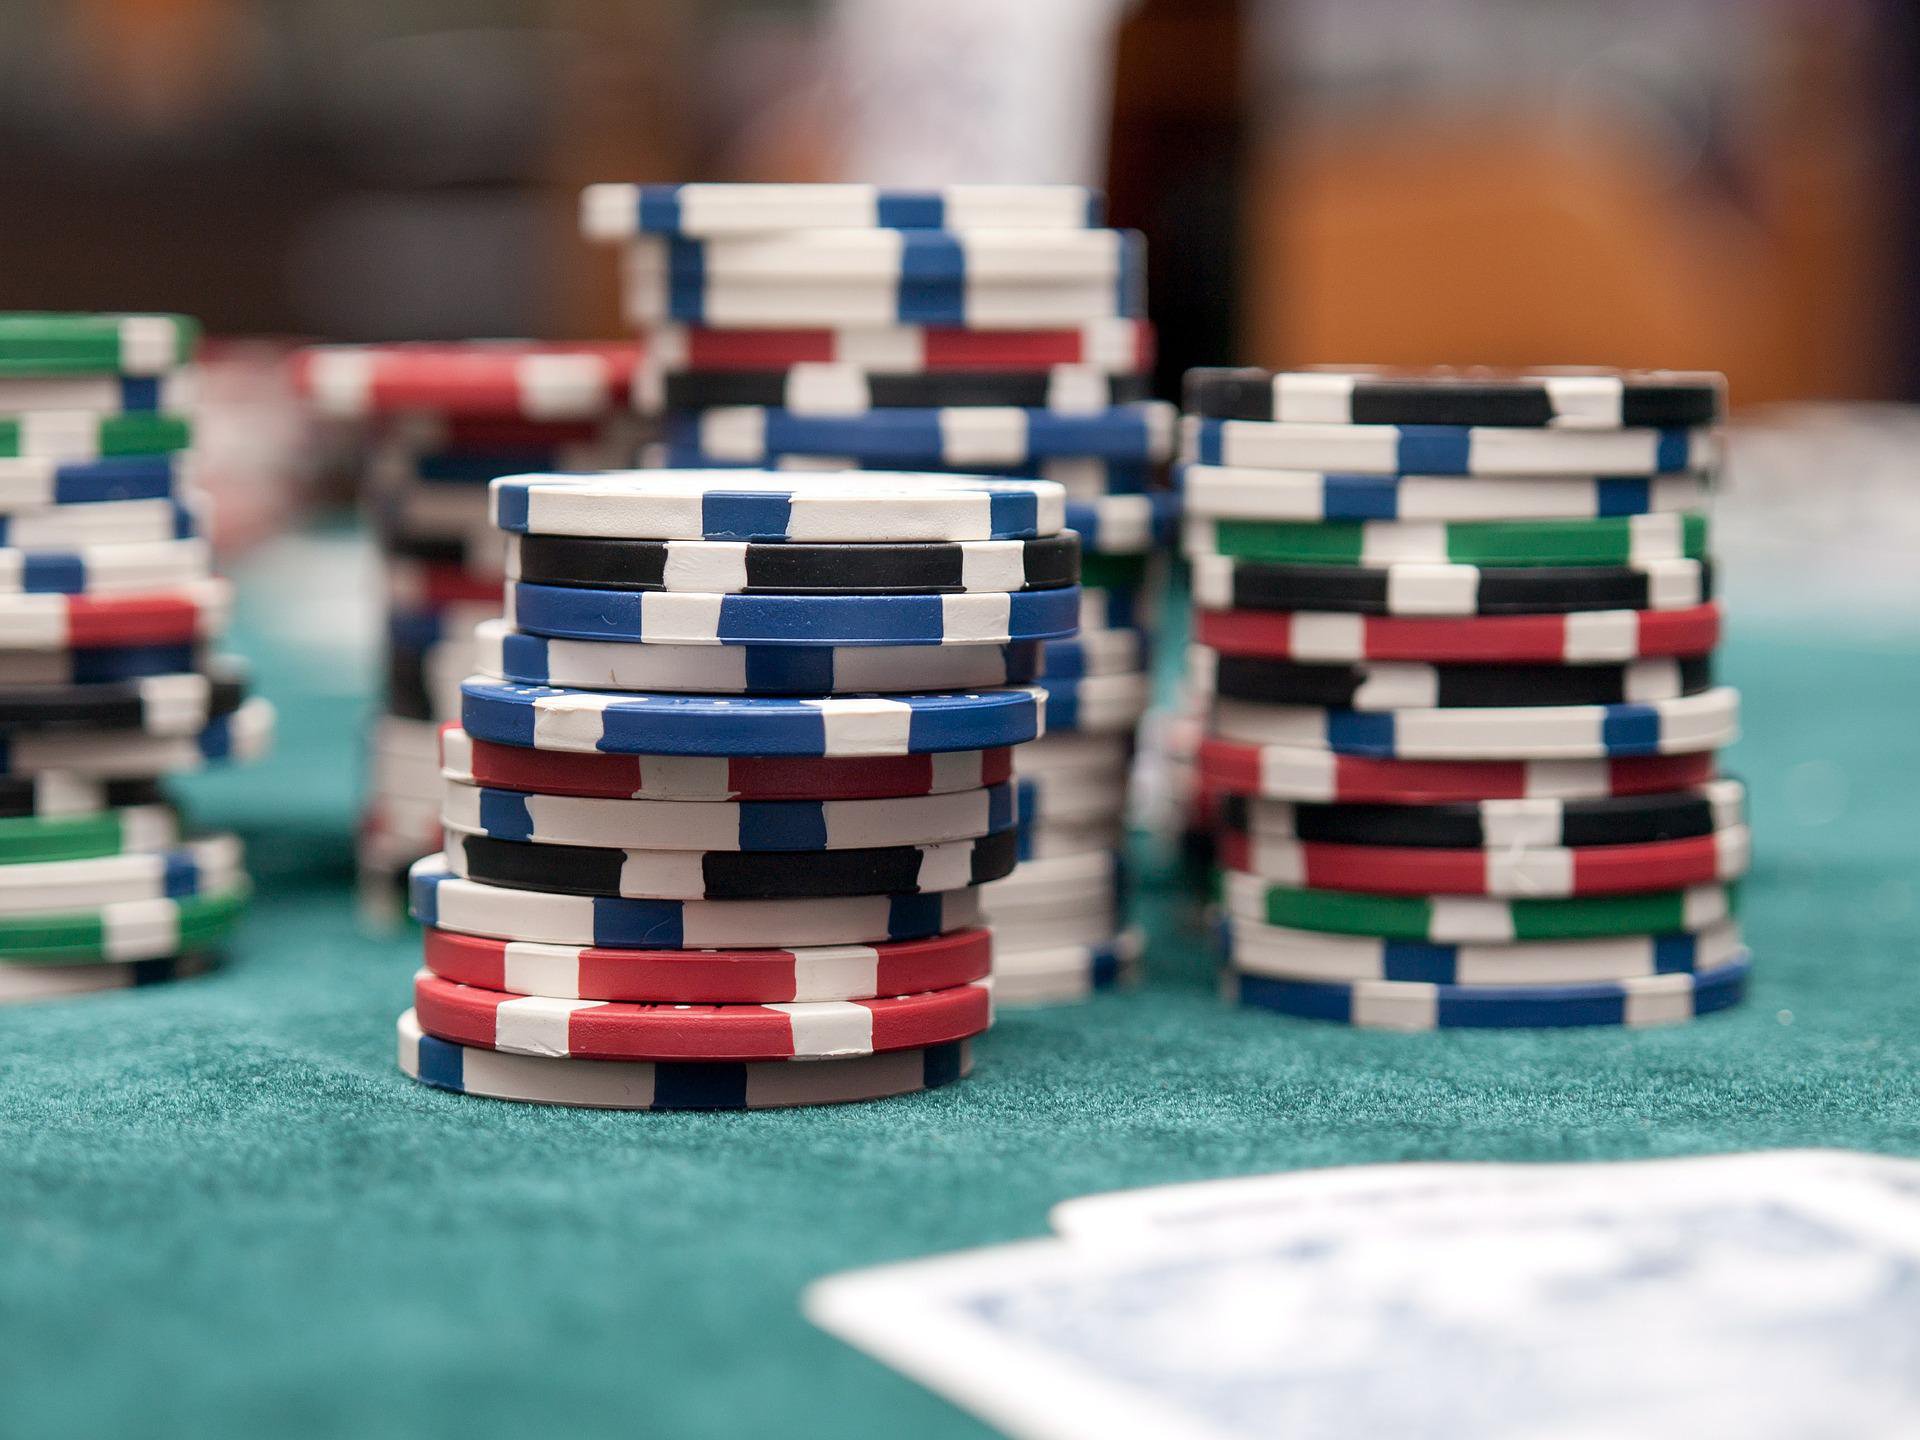 BetMGM Live Poker Championship in Nevada Breaks Guarantee, Likely to Challenge WSOP/888